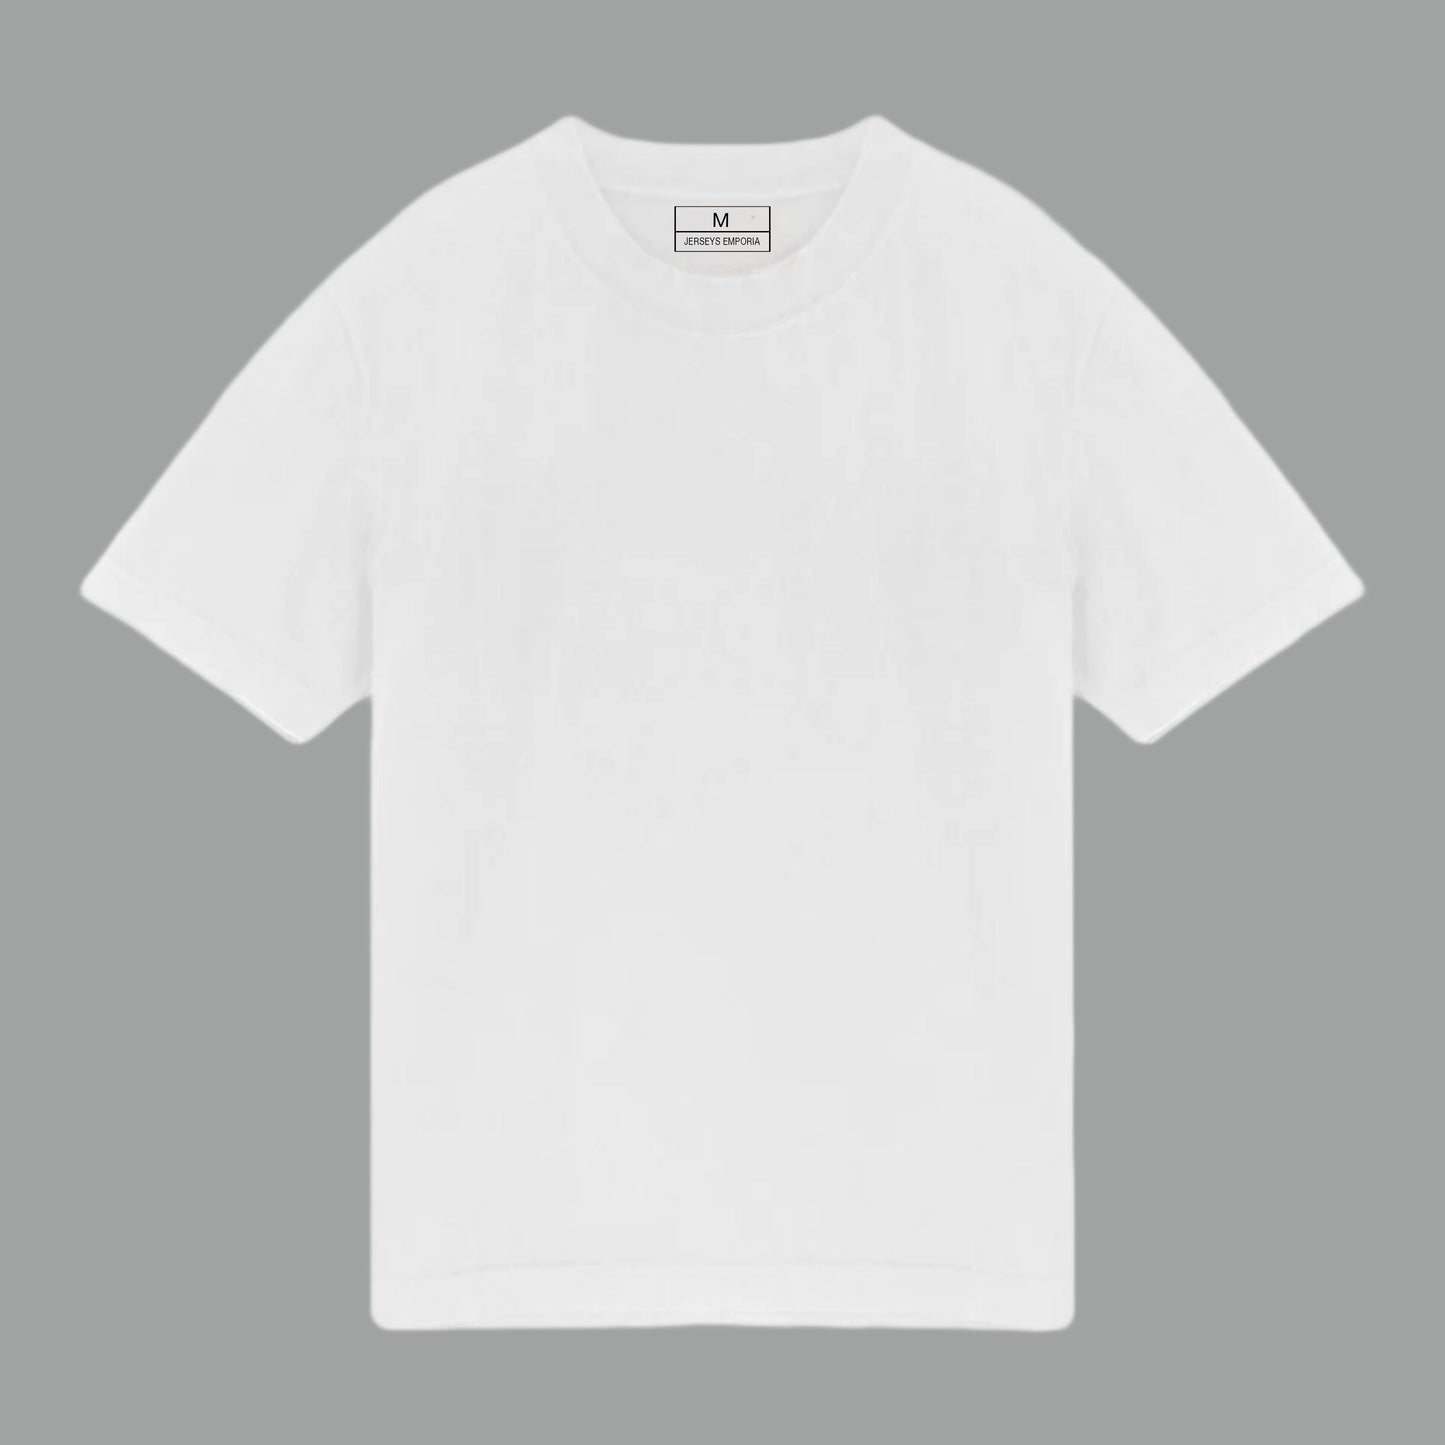 King Kohli white Oversized T-shirt new primiuam quality